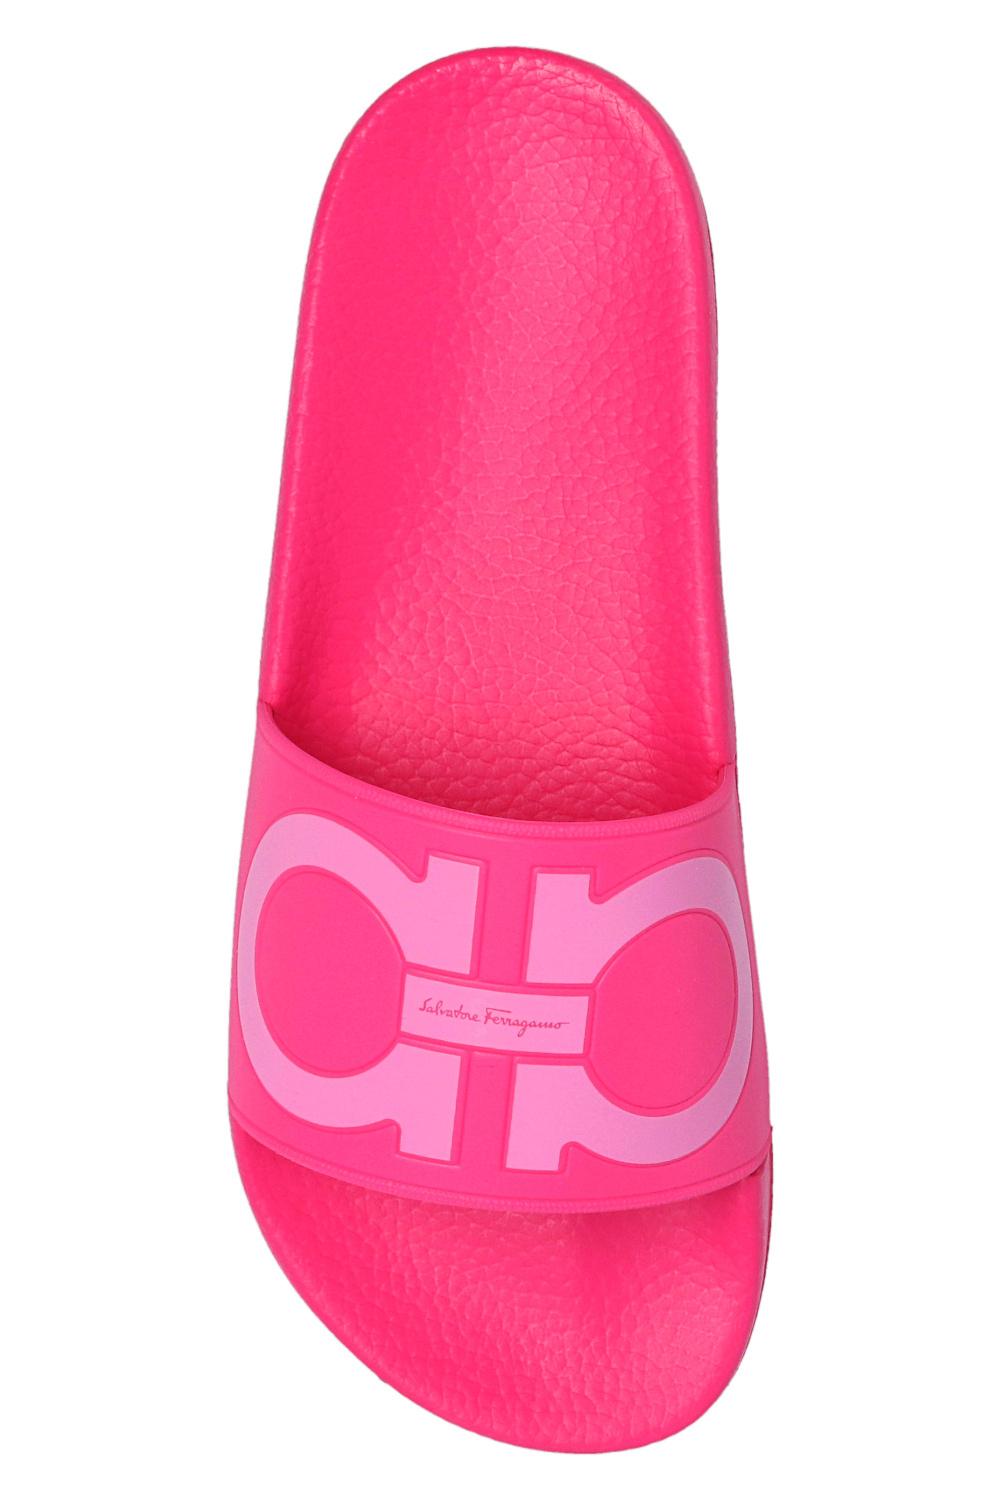 Ferragamo Rubber Slides in Pink | Lyst